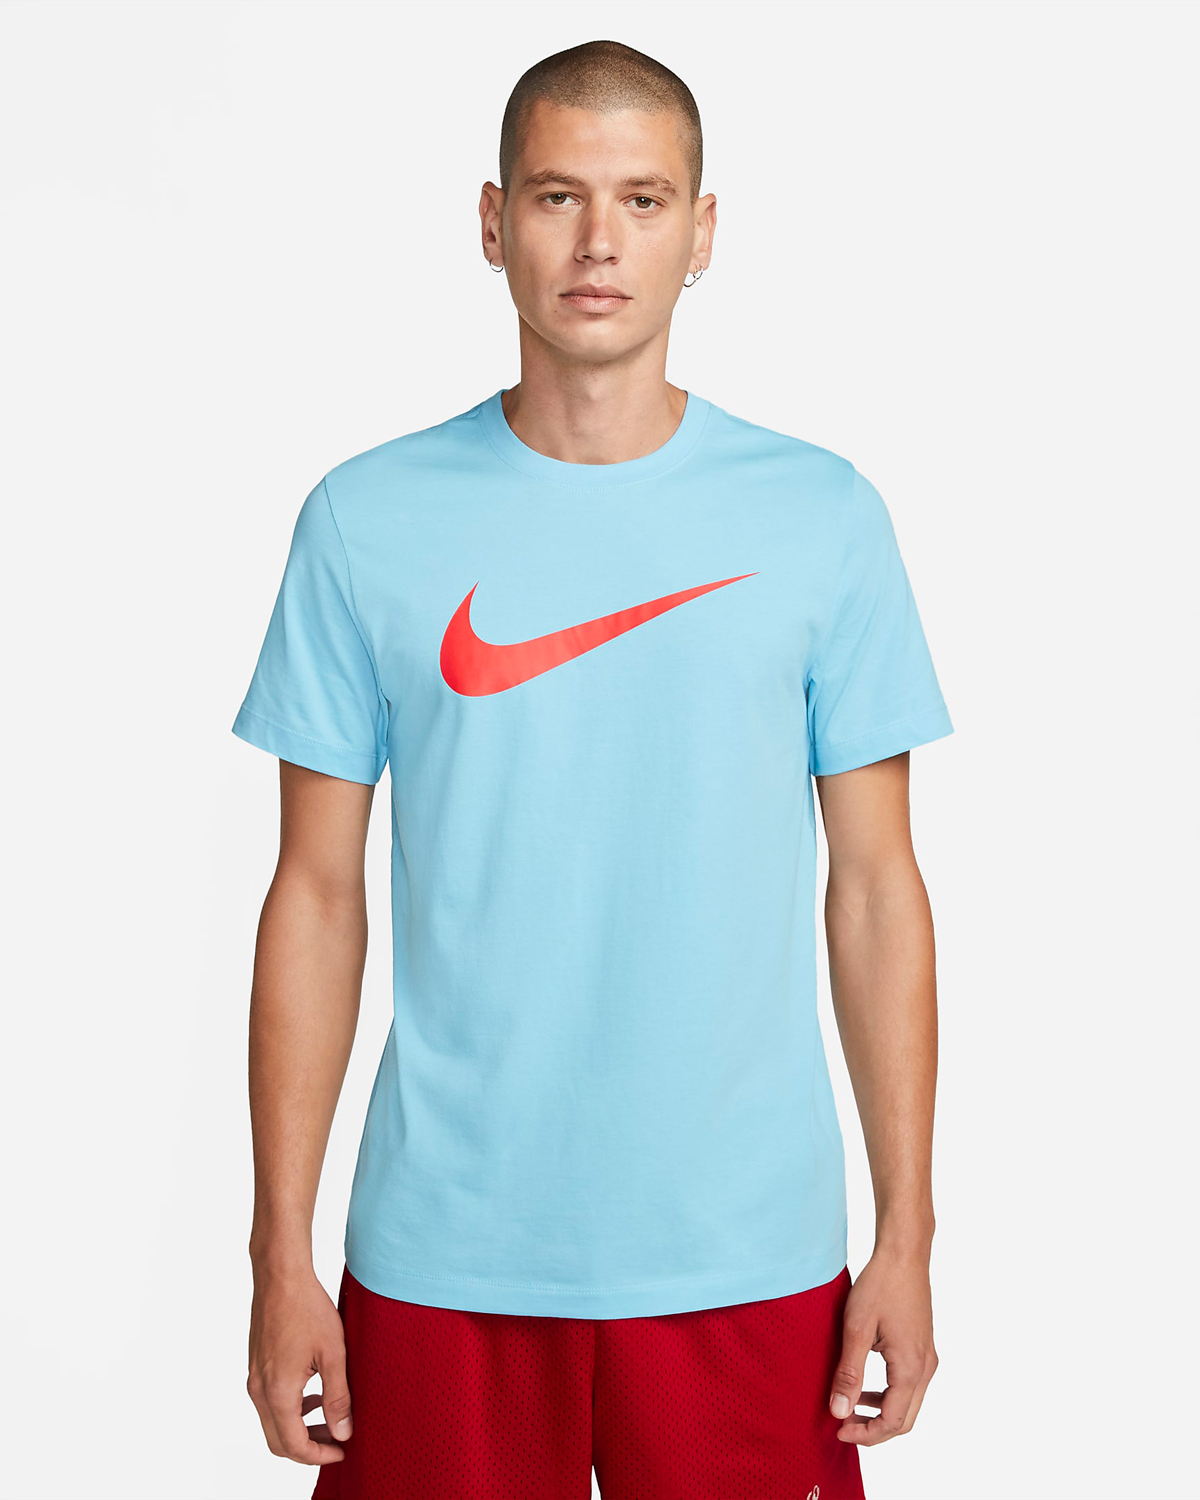 Nike-Blue-Chill-T-Shirt-3